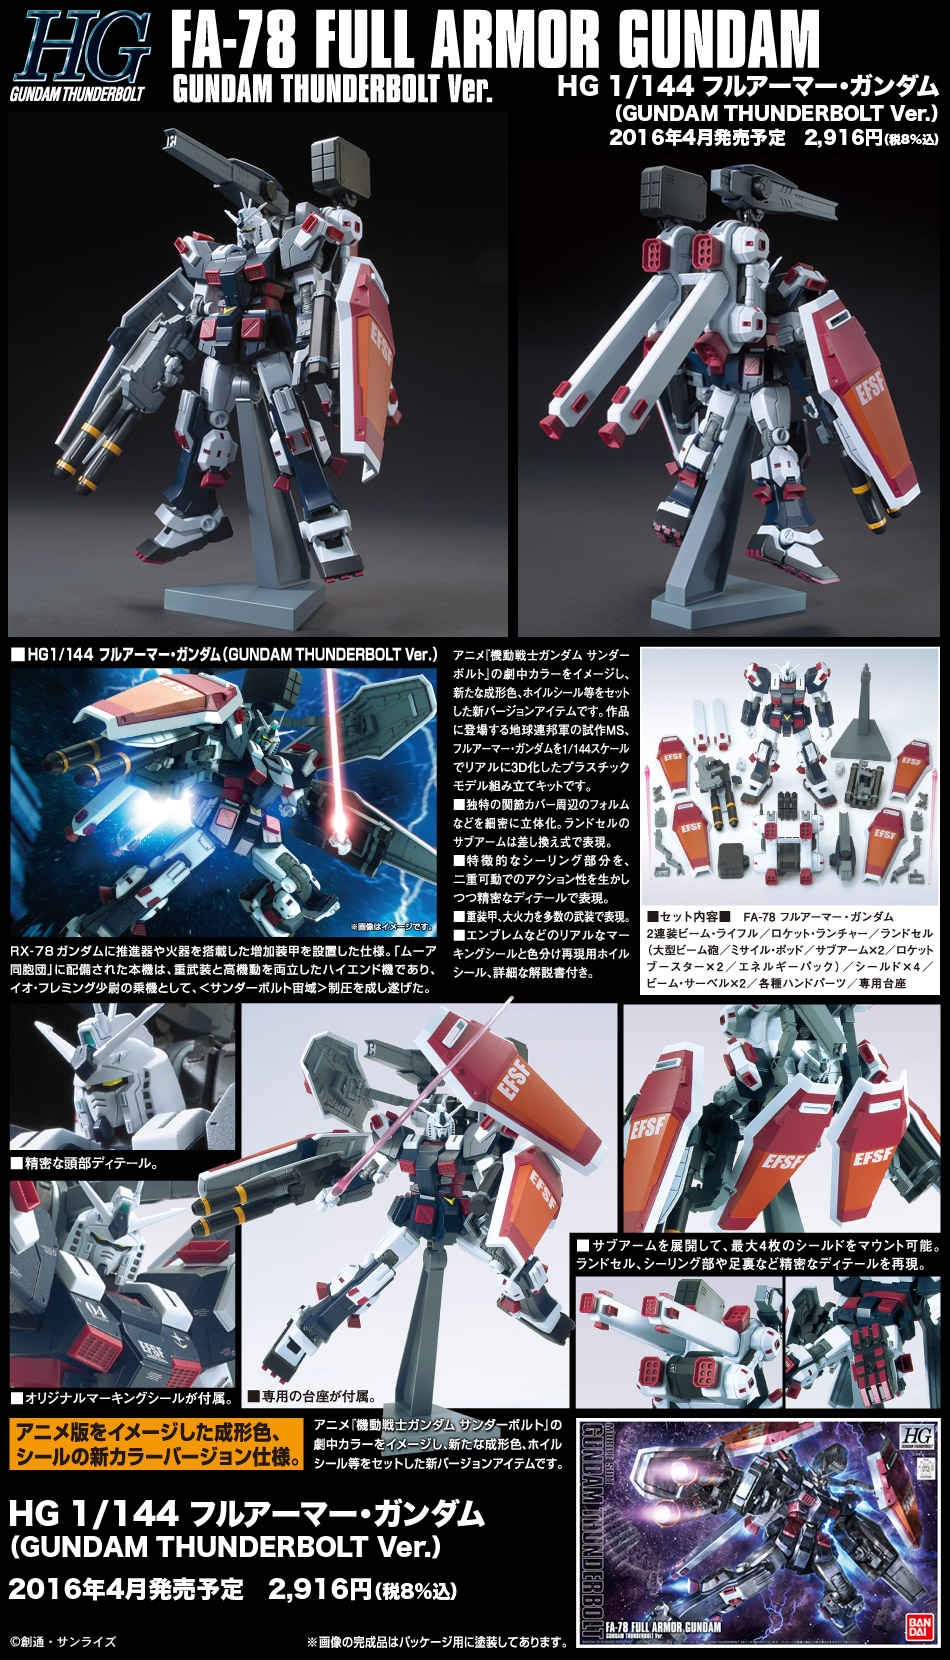 Hg 1 144 フルアーマー ガンダム Gundam Thunderbolt Ver バンダイ ホビーサイト